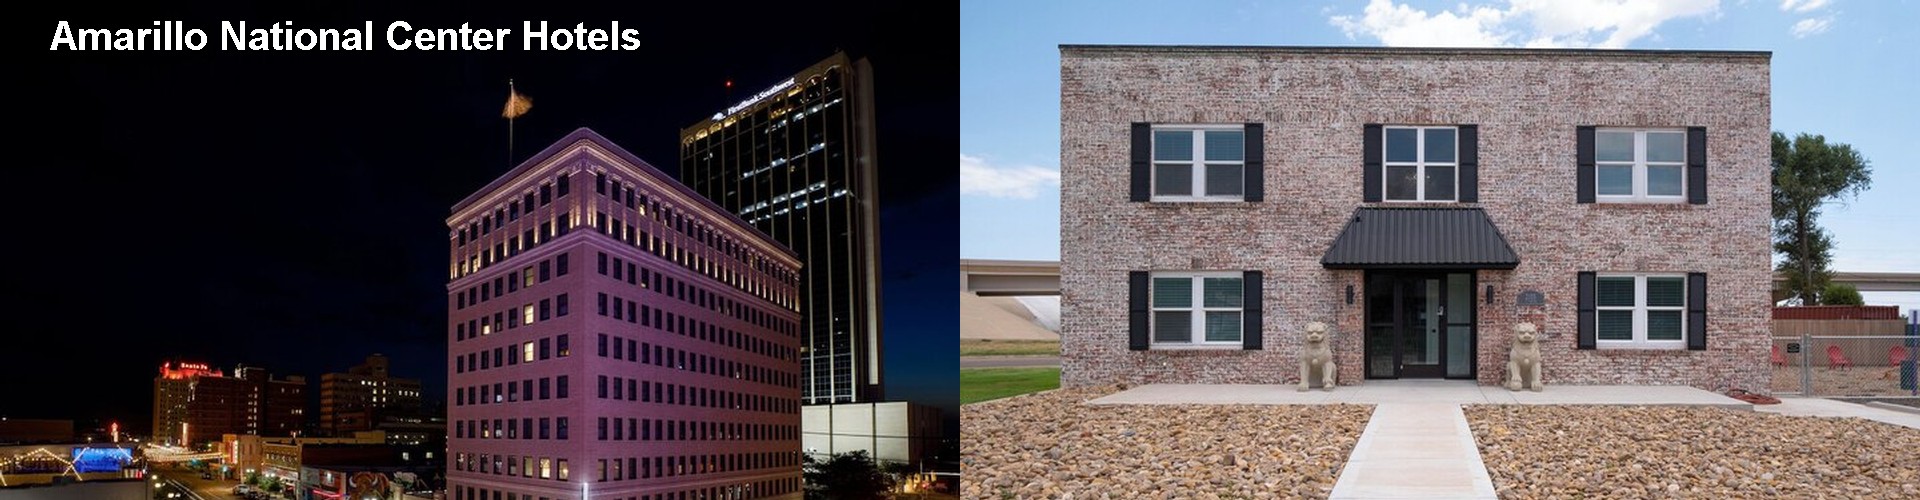 5 Best Hotels near Amarillo National Center